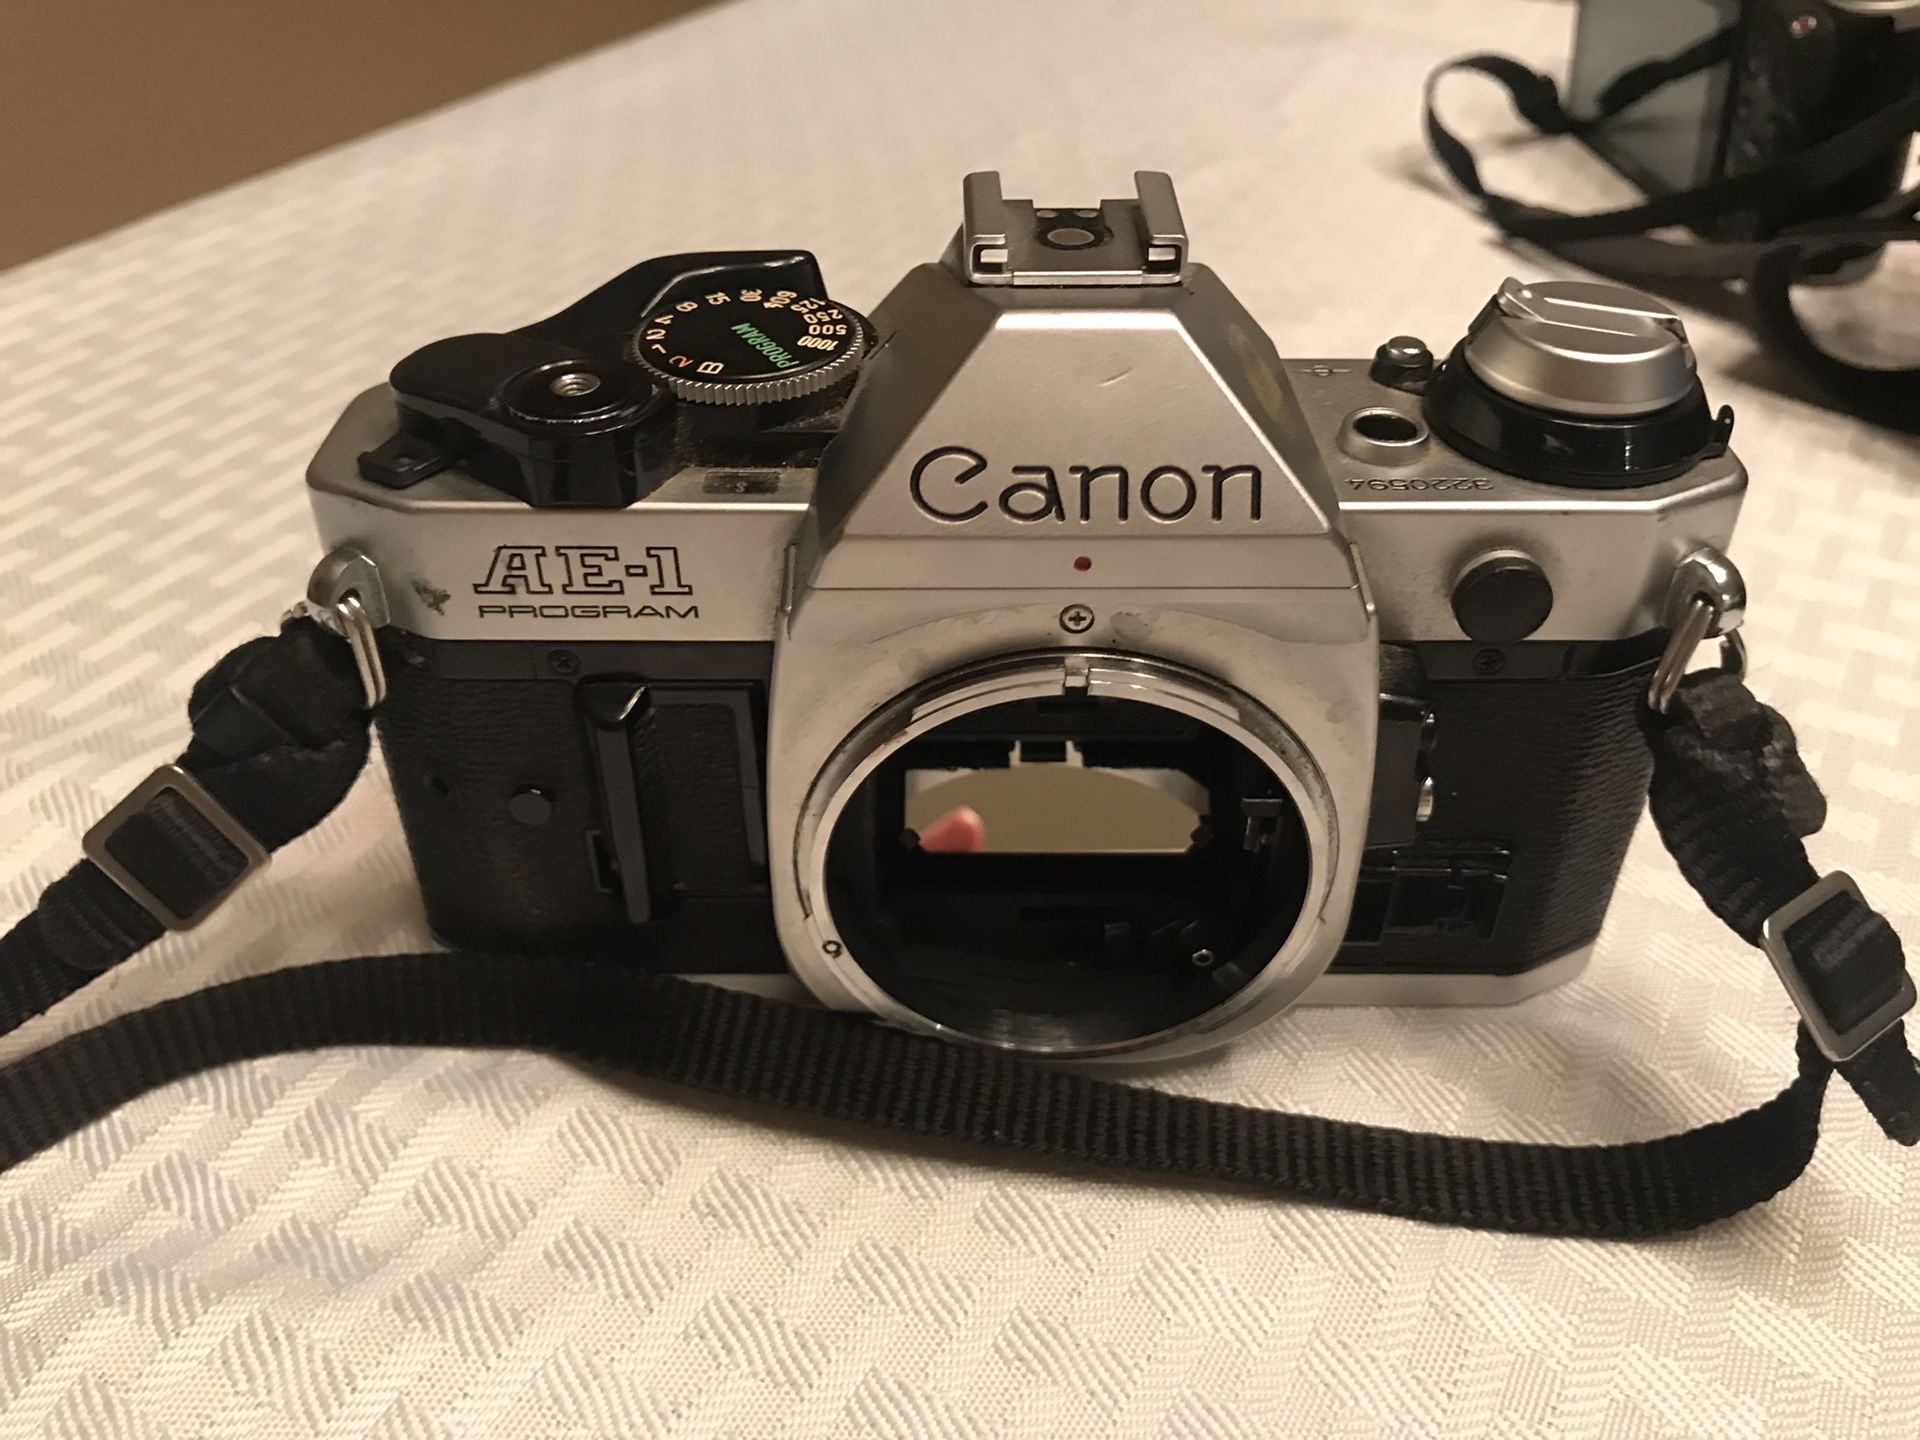 Canon AE-1 Program 35mm SLR film camera